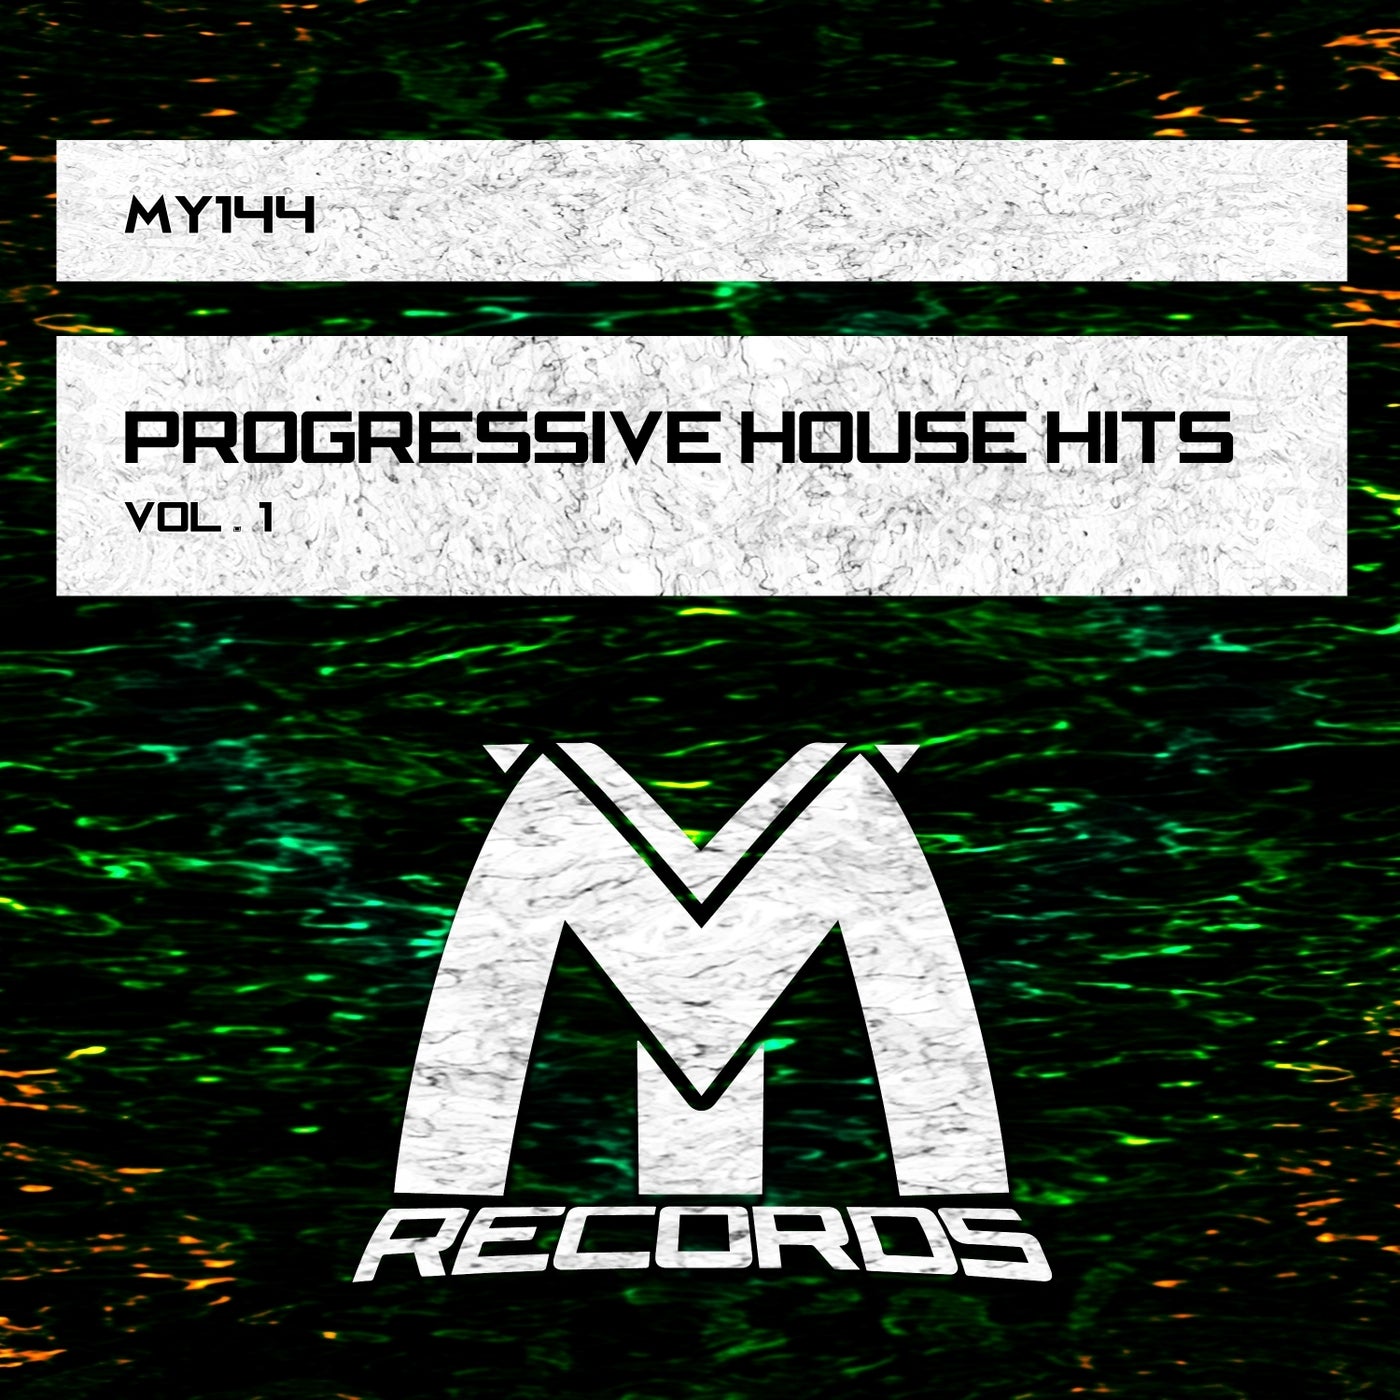 Progressive House Hits, Vol. 1